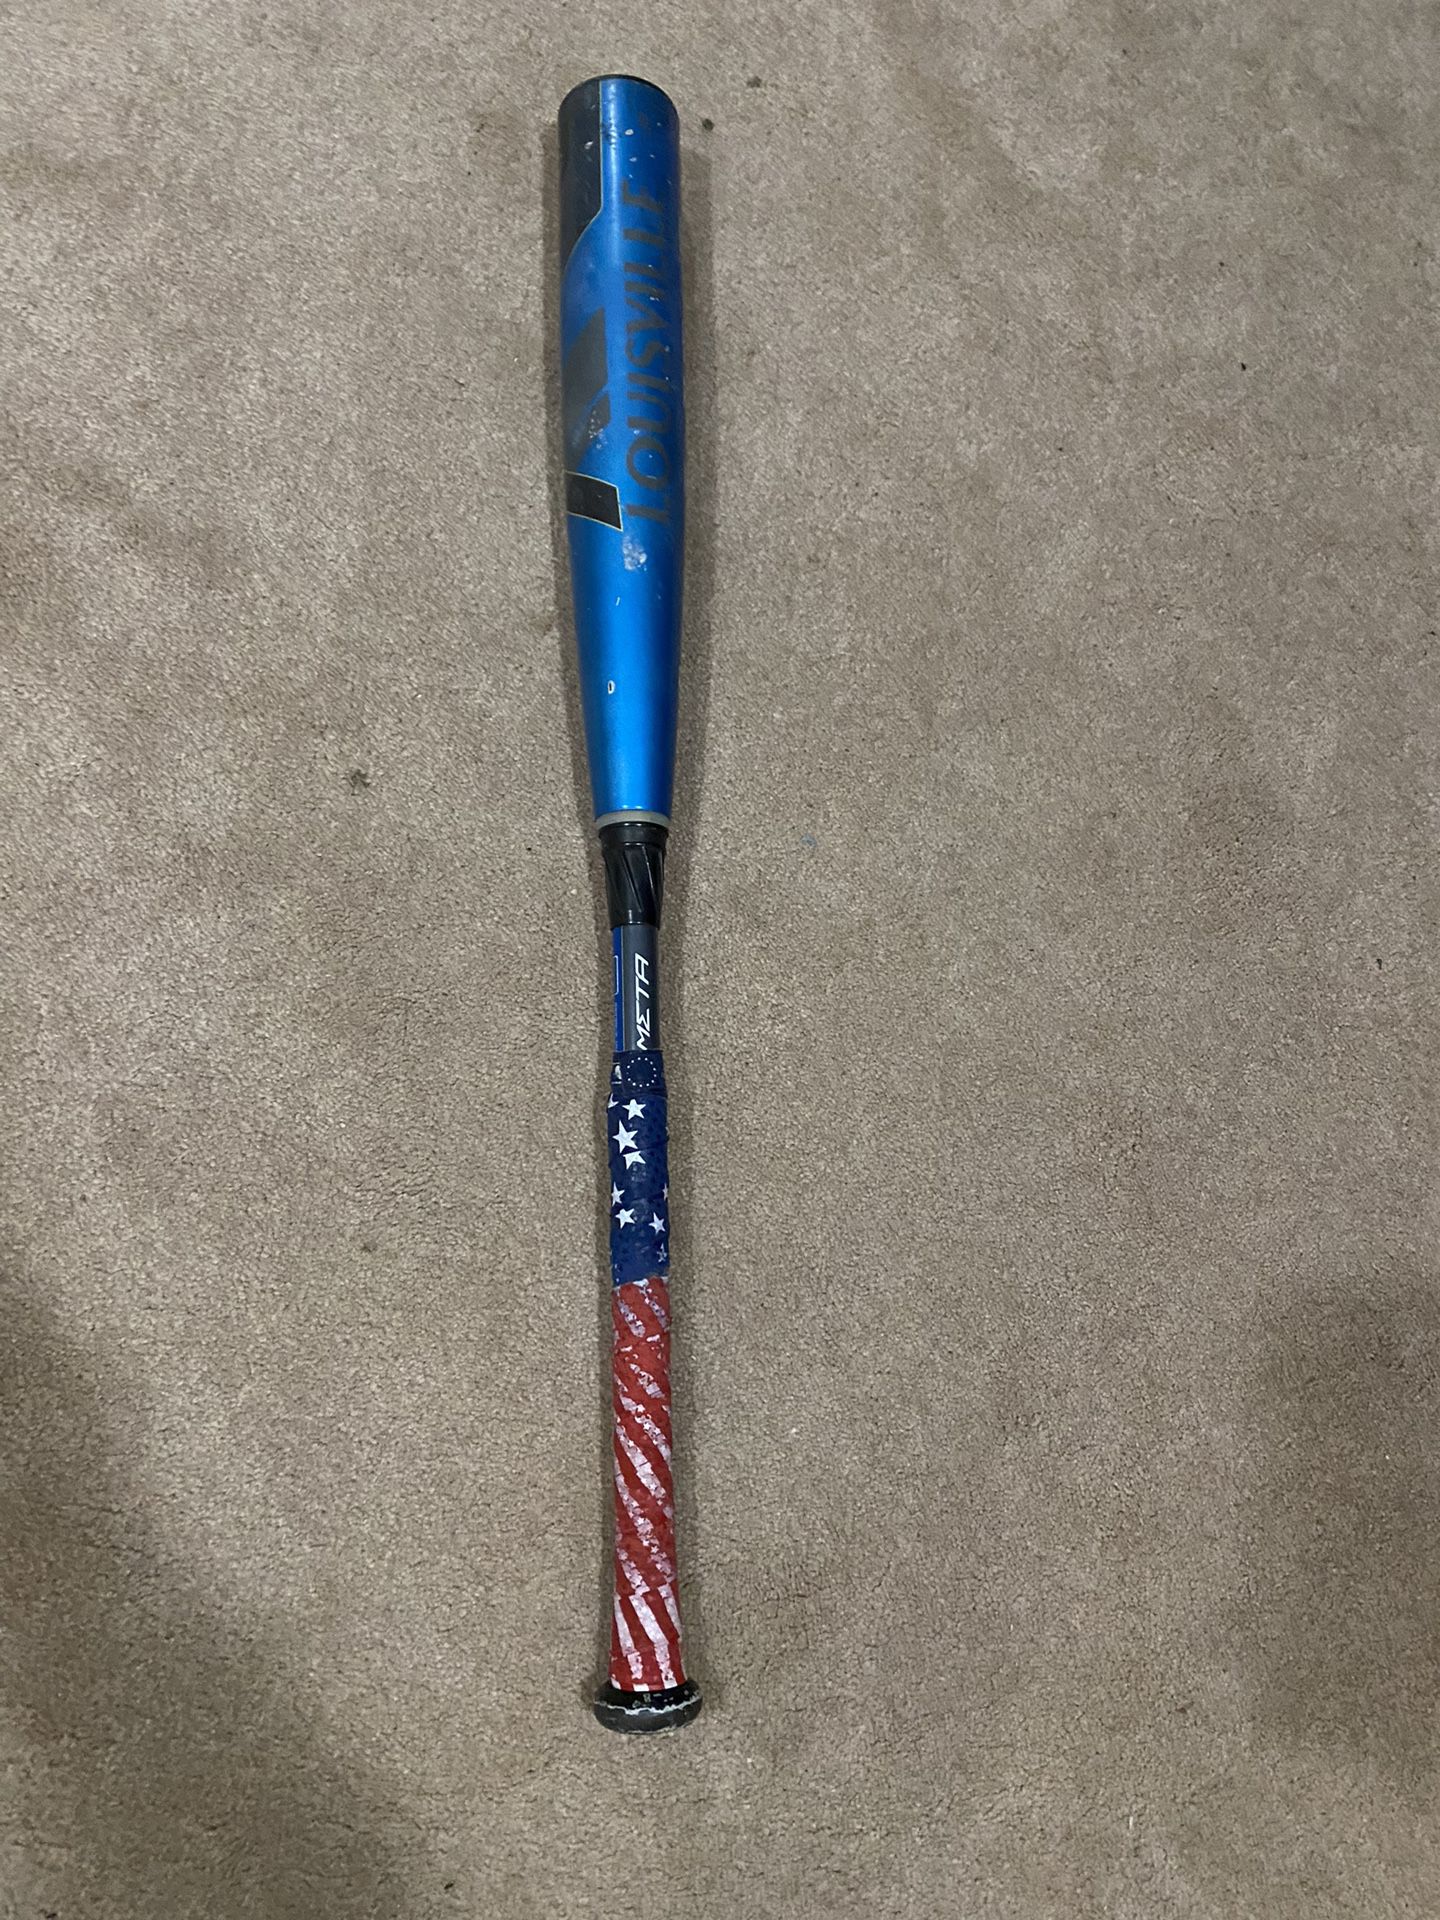 2020 Louisville Slugger Meta(-3) Bbcor Baseball Bat